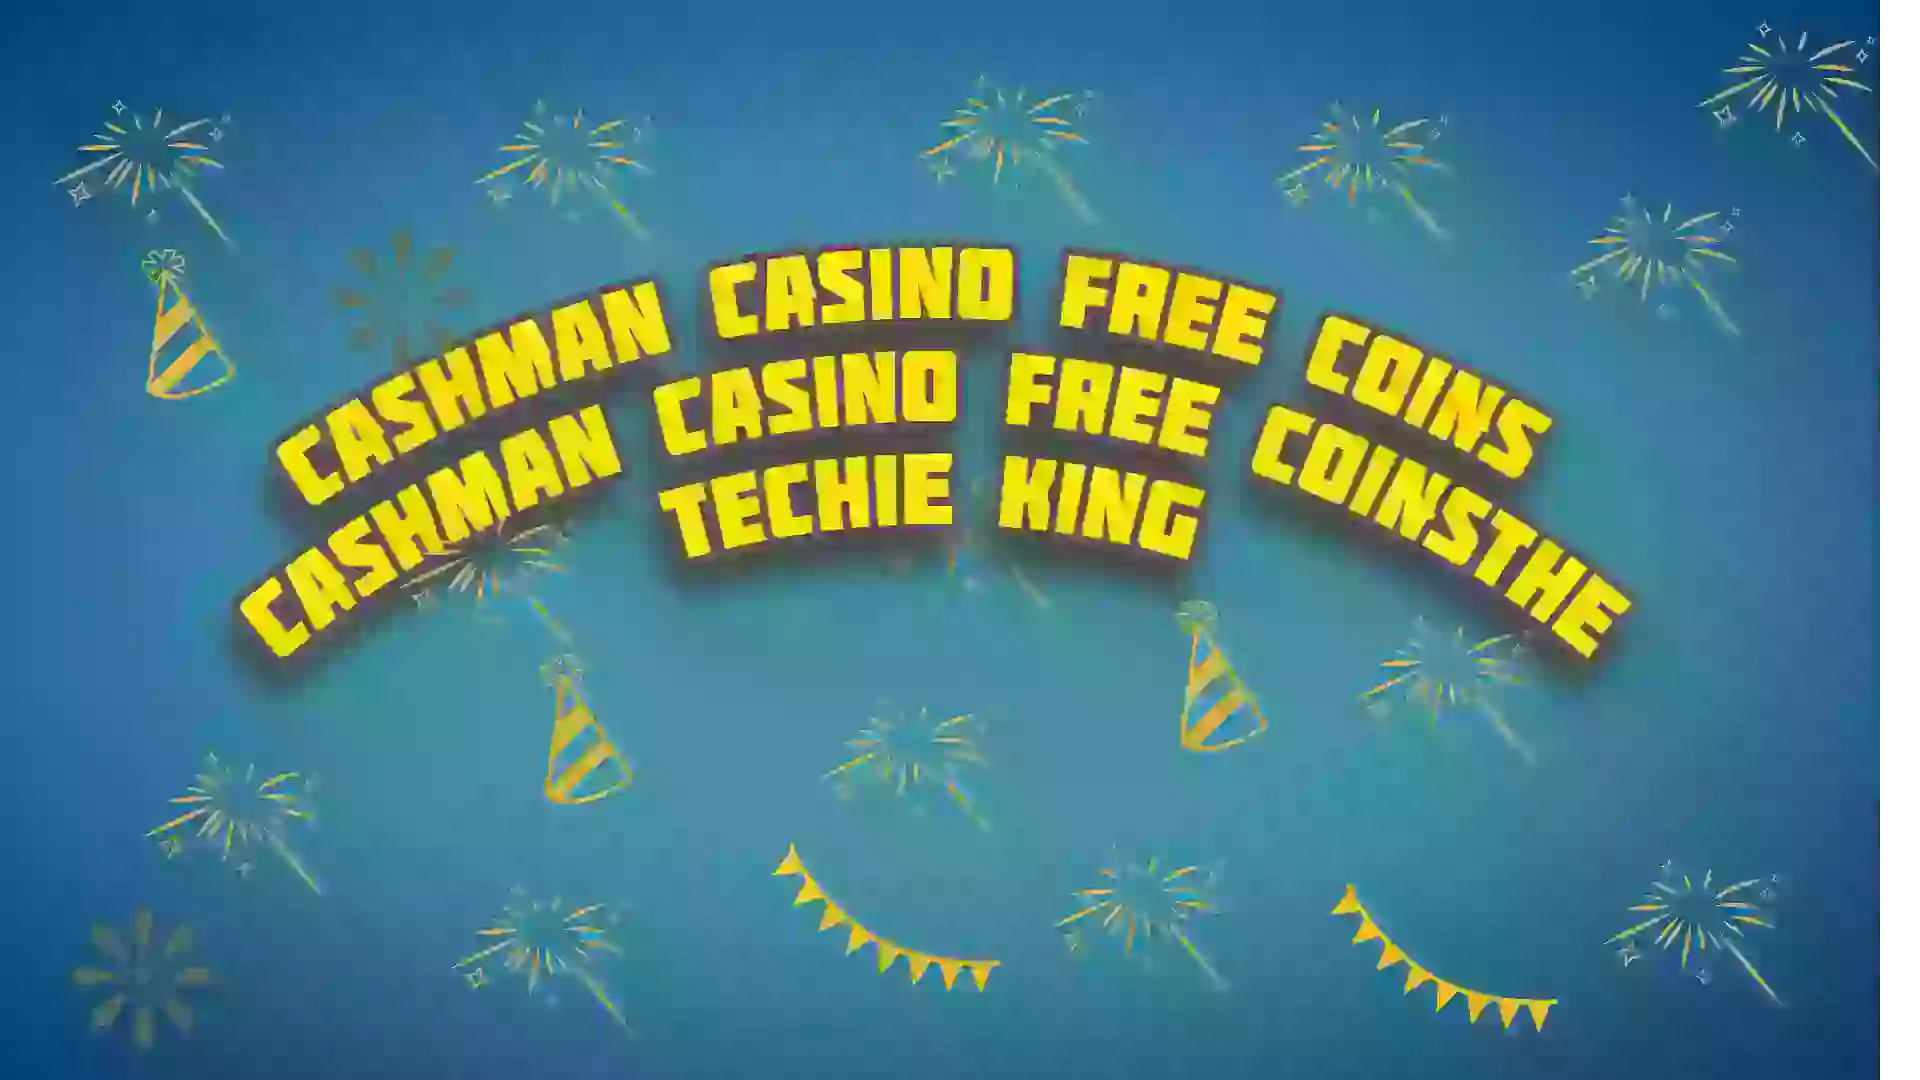 Cashman Casino Free Coins